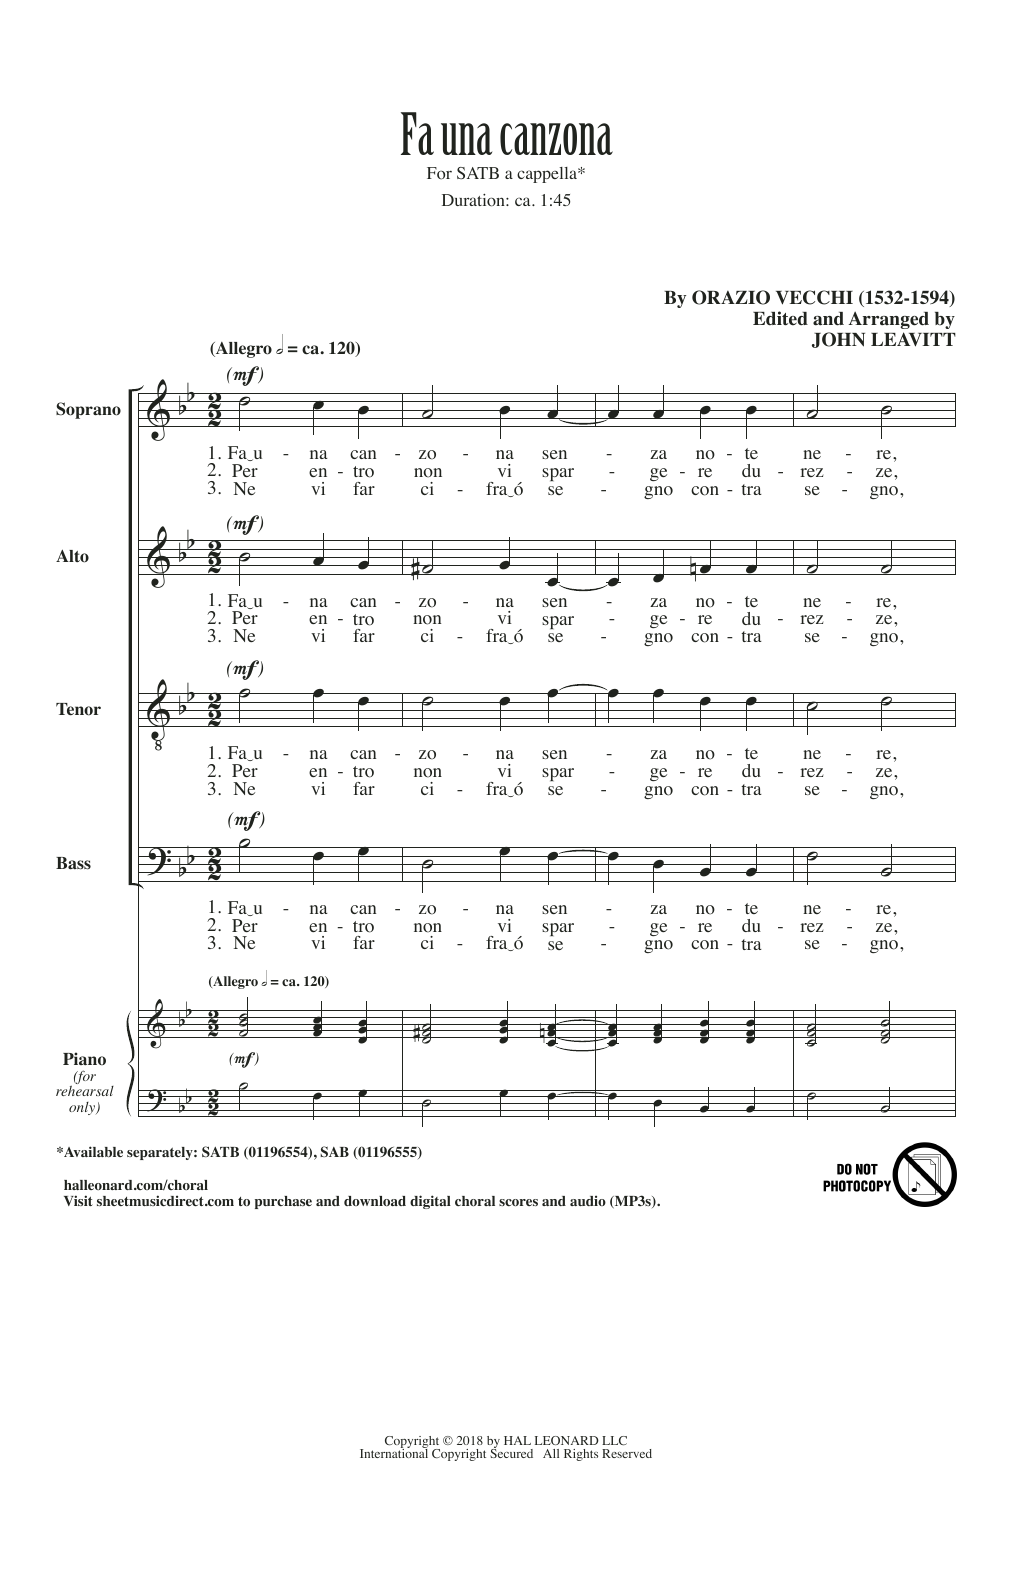 Orazio Vecchi Fa Una Canzona (arr. John Leavitt) Sheet Music Notes & Chords for SATB Choir - Download or Print PDF